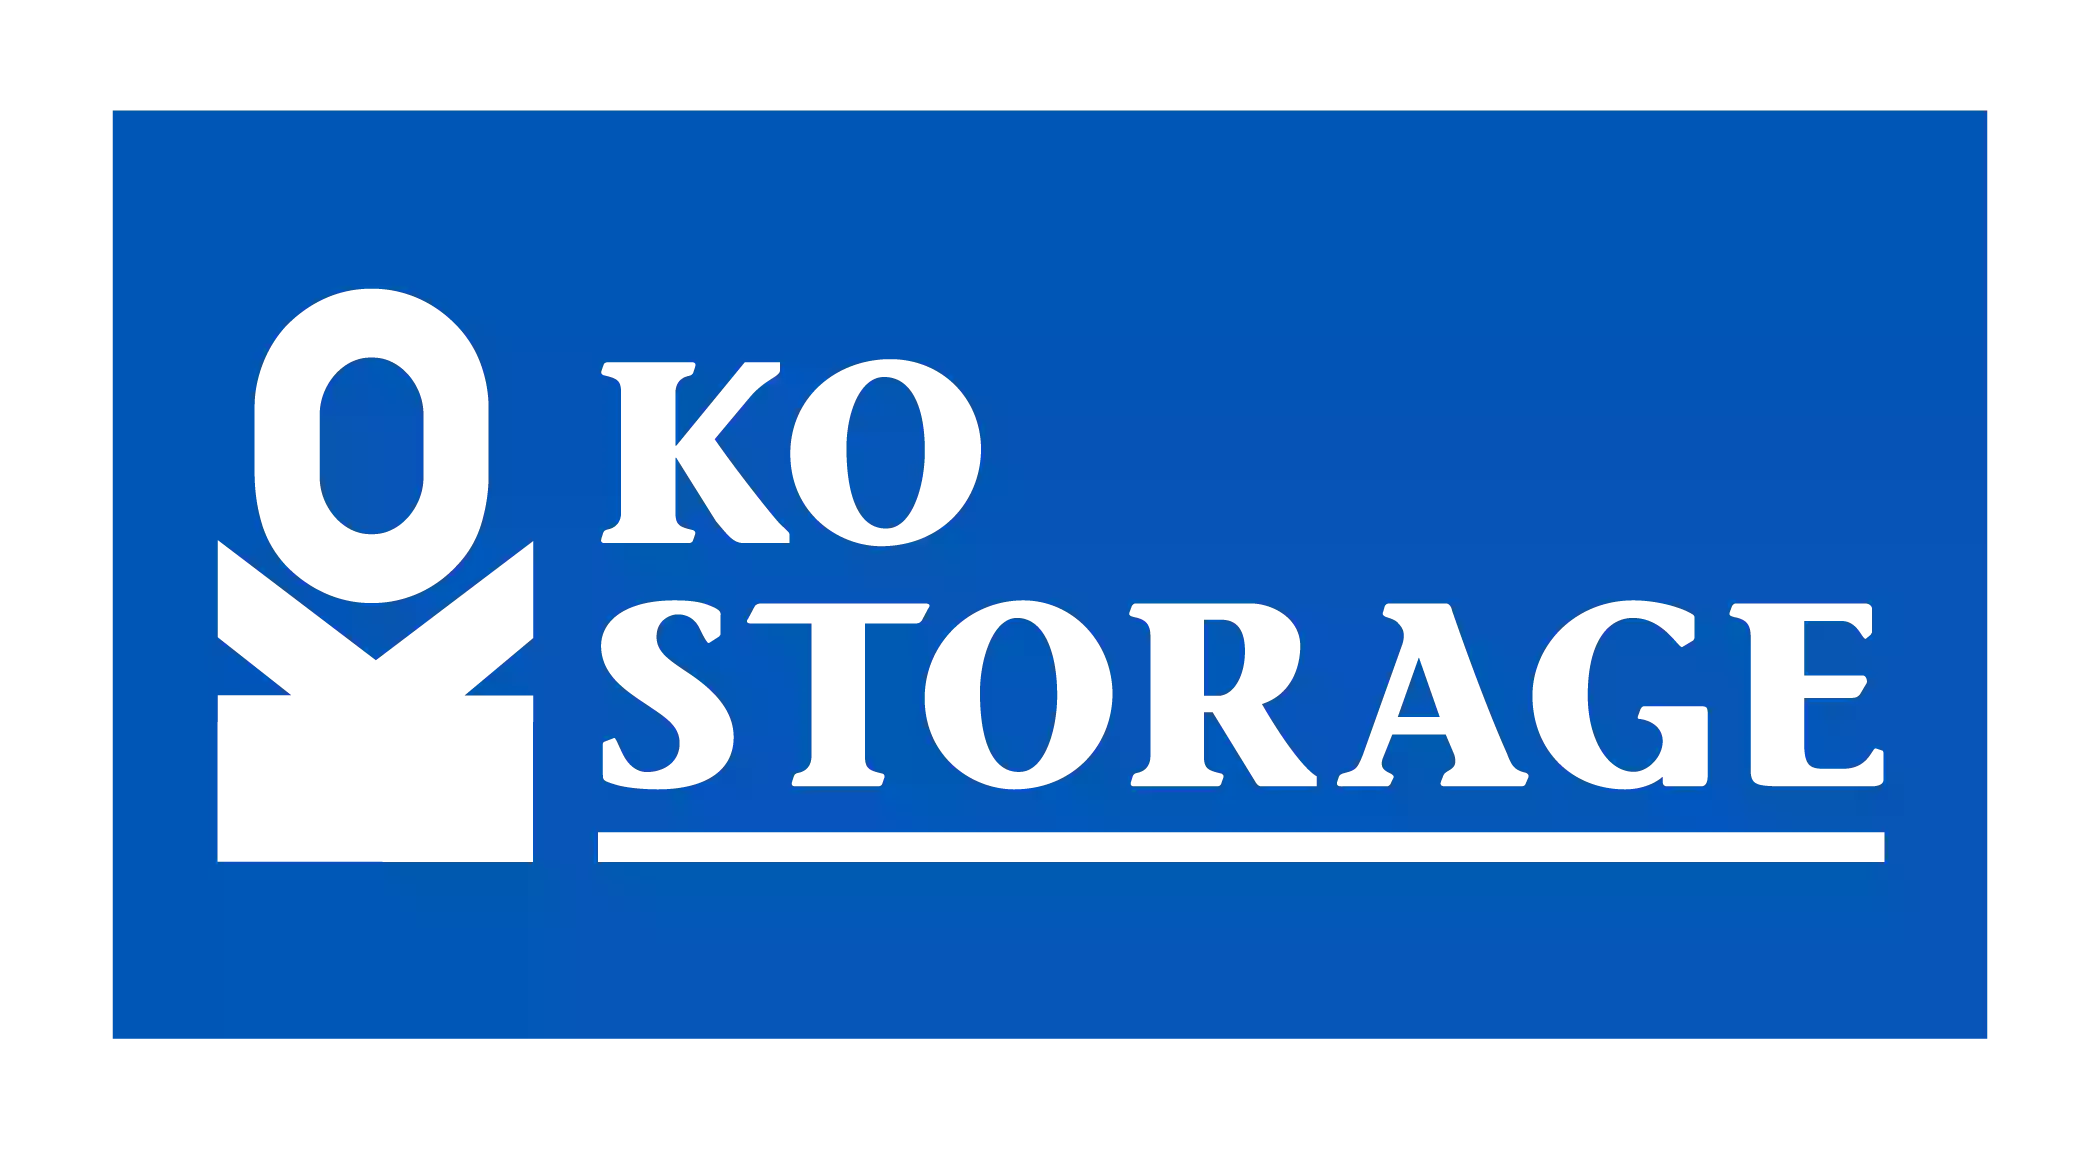 KO Storage